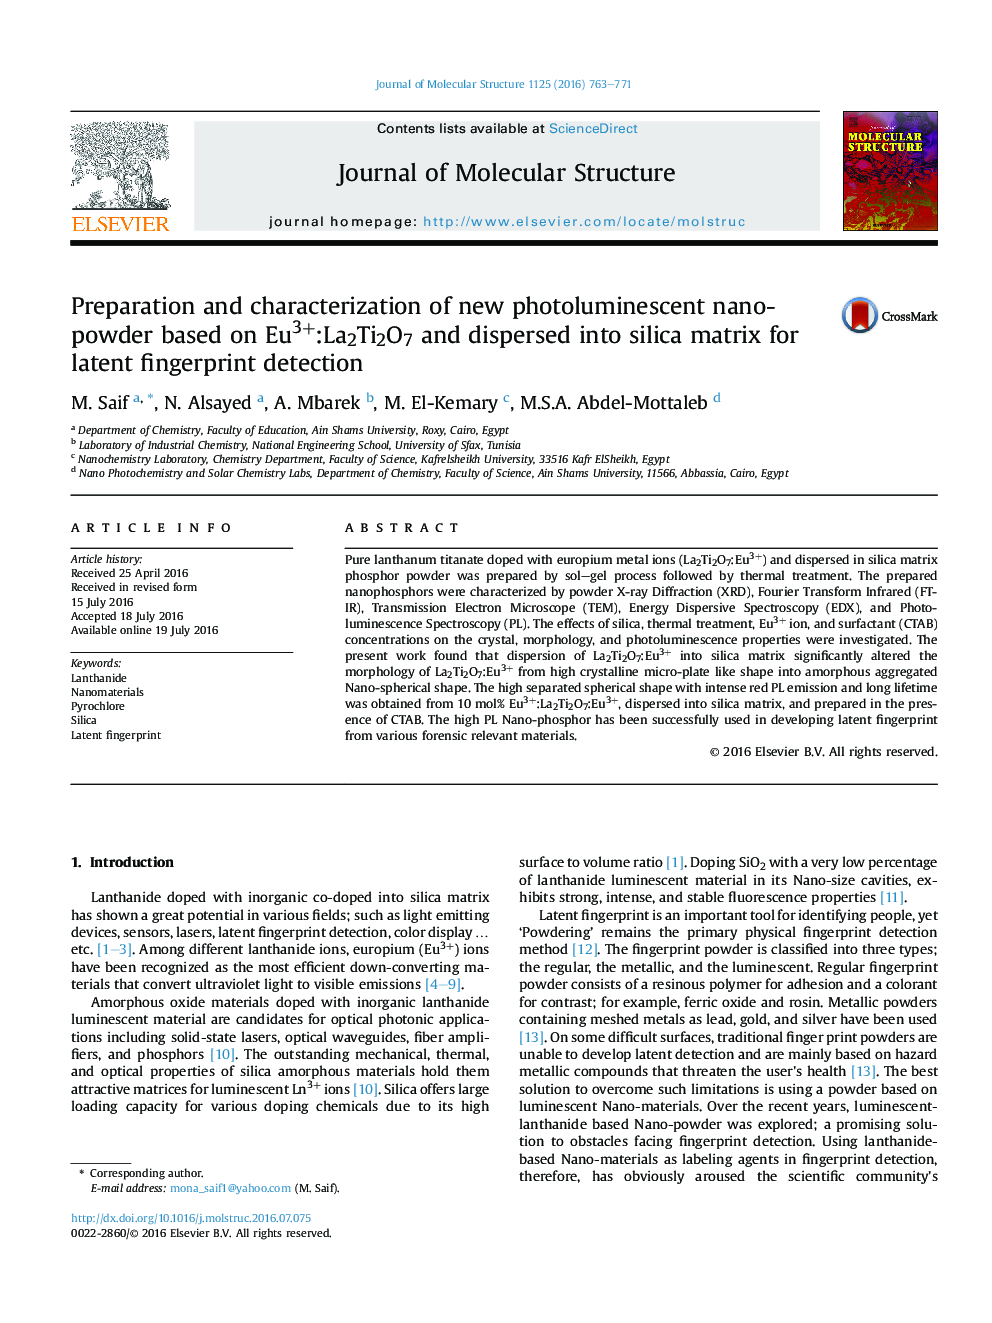 Preparation and characterization of new photoluminescent nano-powder based on Eu3+:La2Ti2O7 and dispersed into silica matrix for latent fingerprint detection